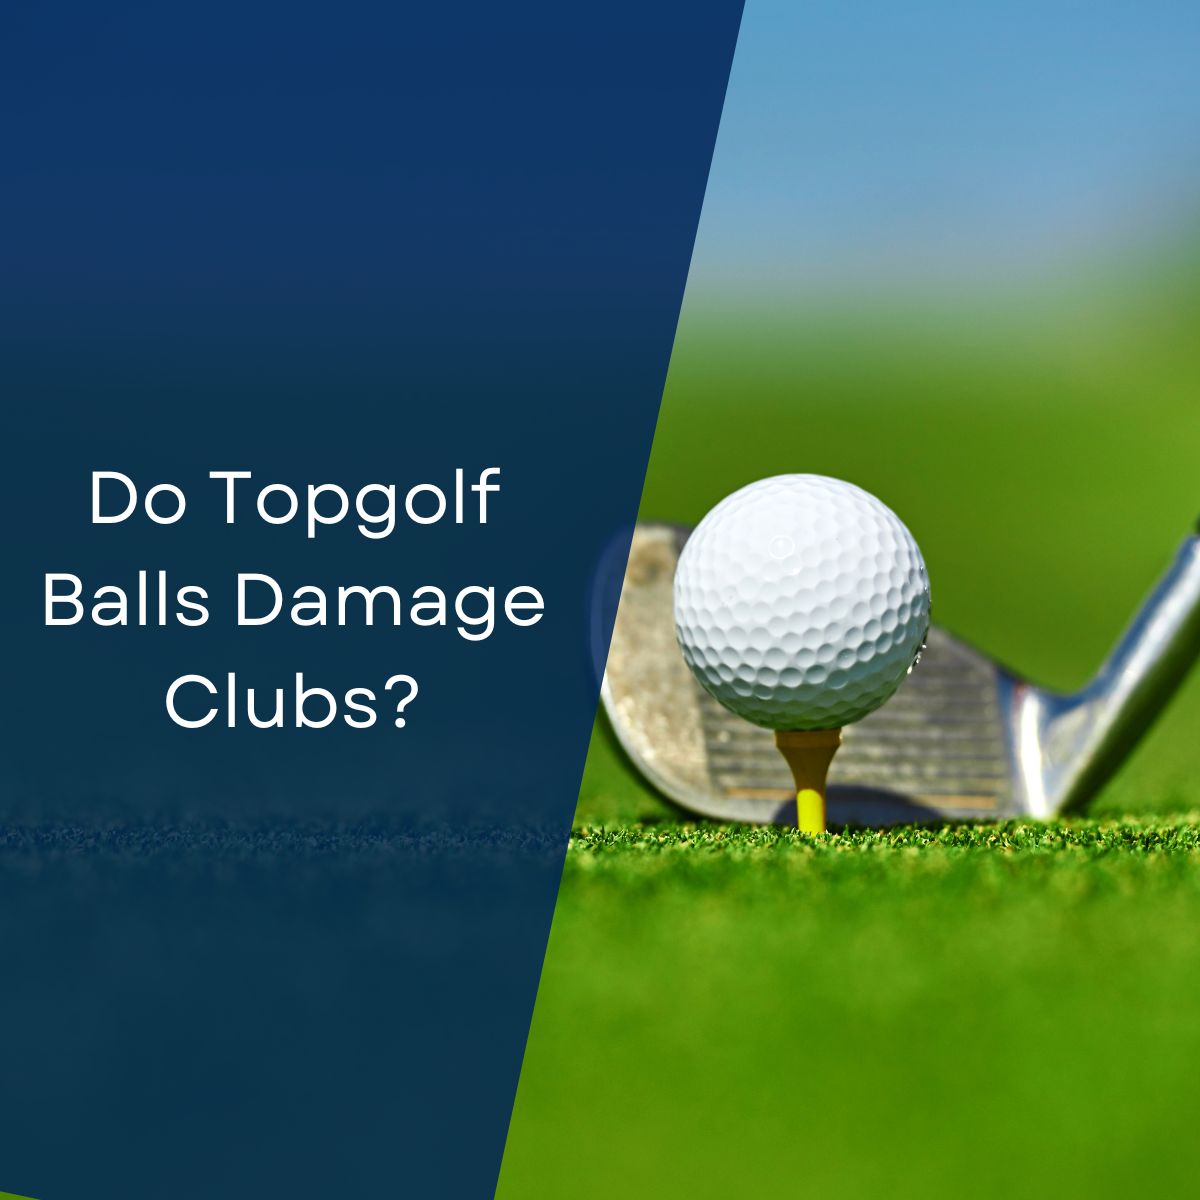 Do Topgolf Balls Damage Clubs?